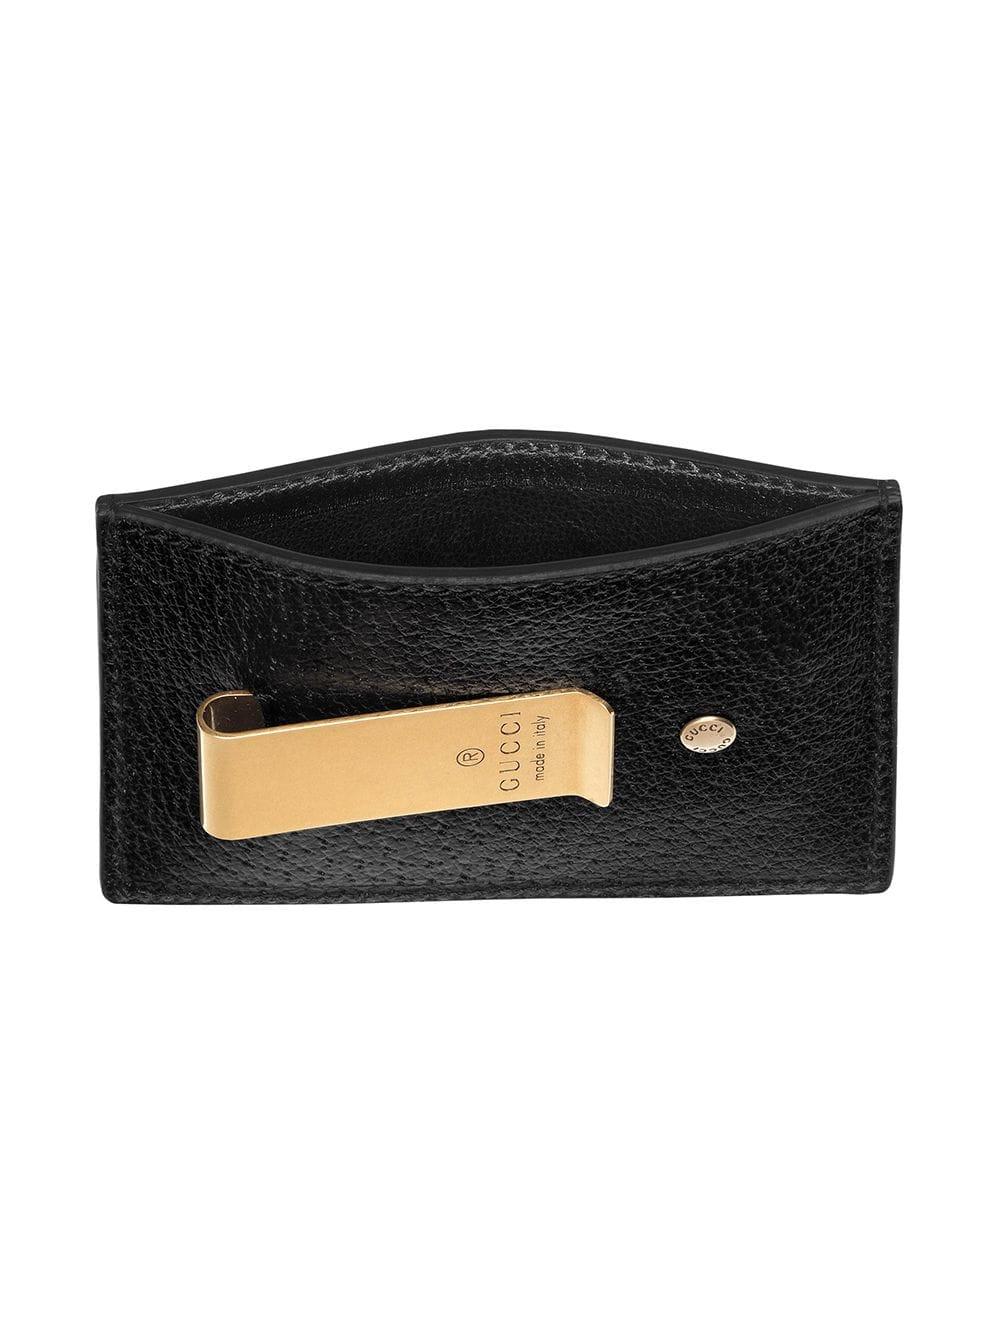 Jumbo GG money clip in black leather